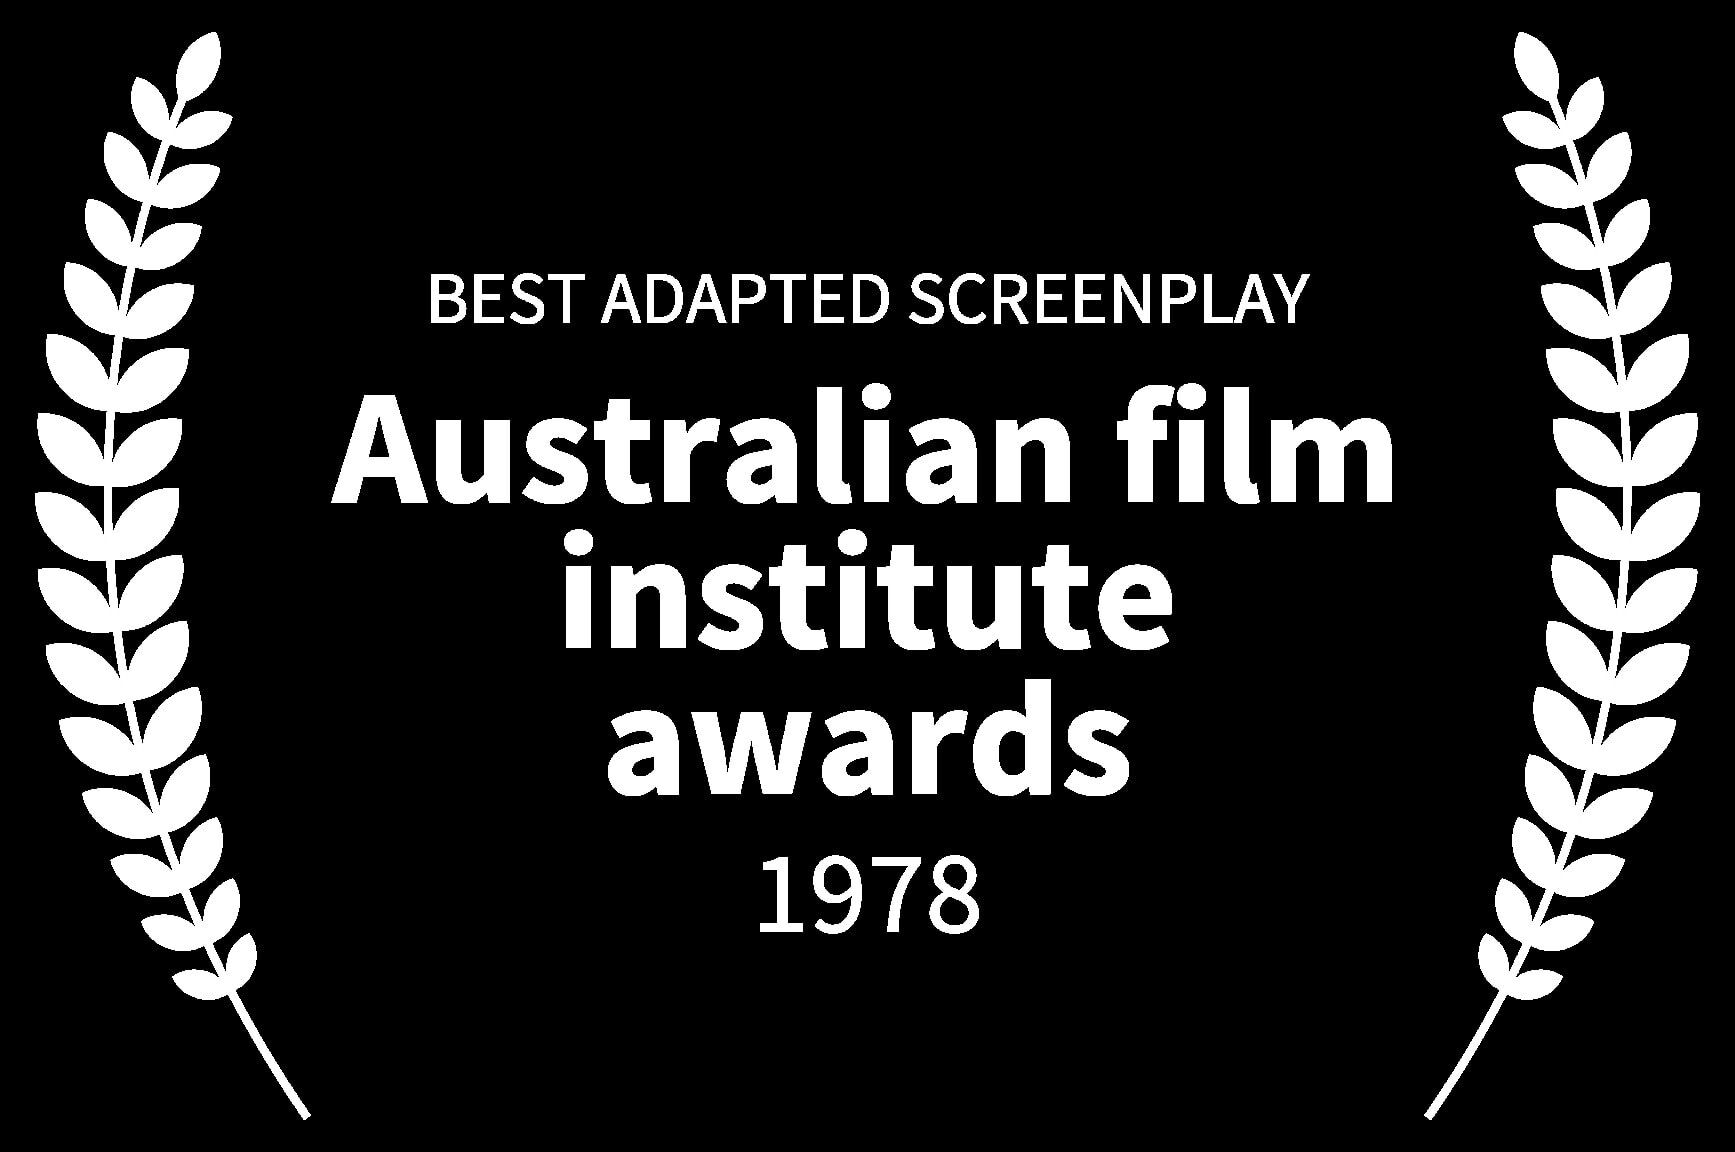 BEST ADAPTED SCREENPLAY - Australian film institute awards - 1978 - Mango tree